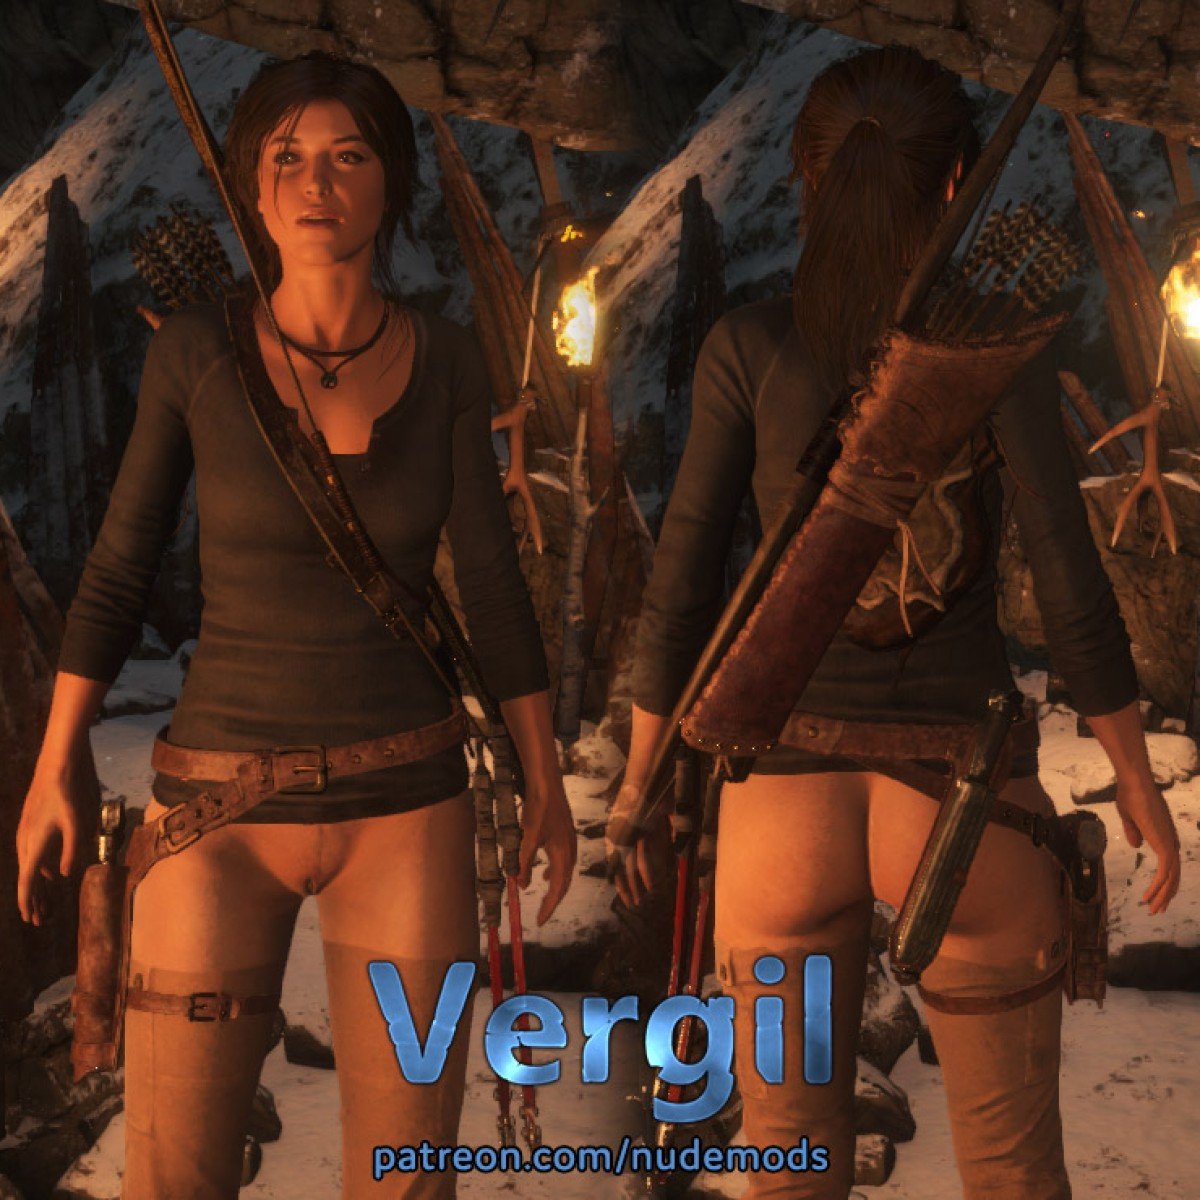 Lara croft naked mod